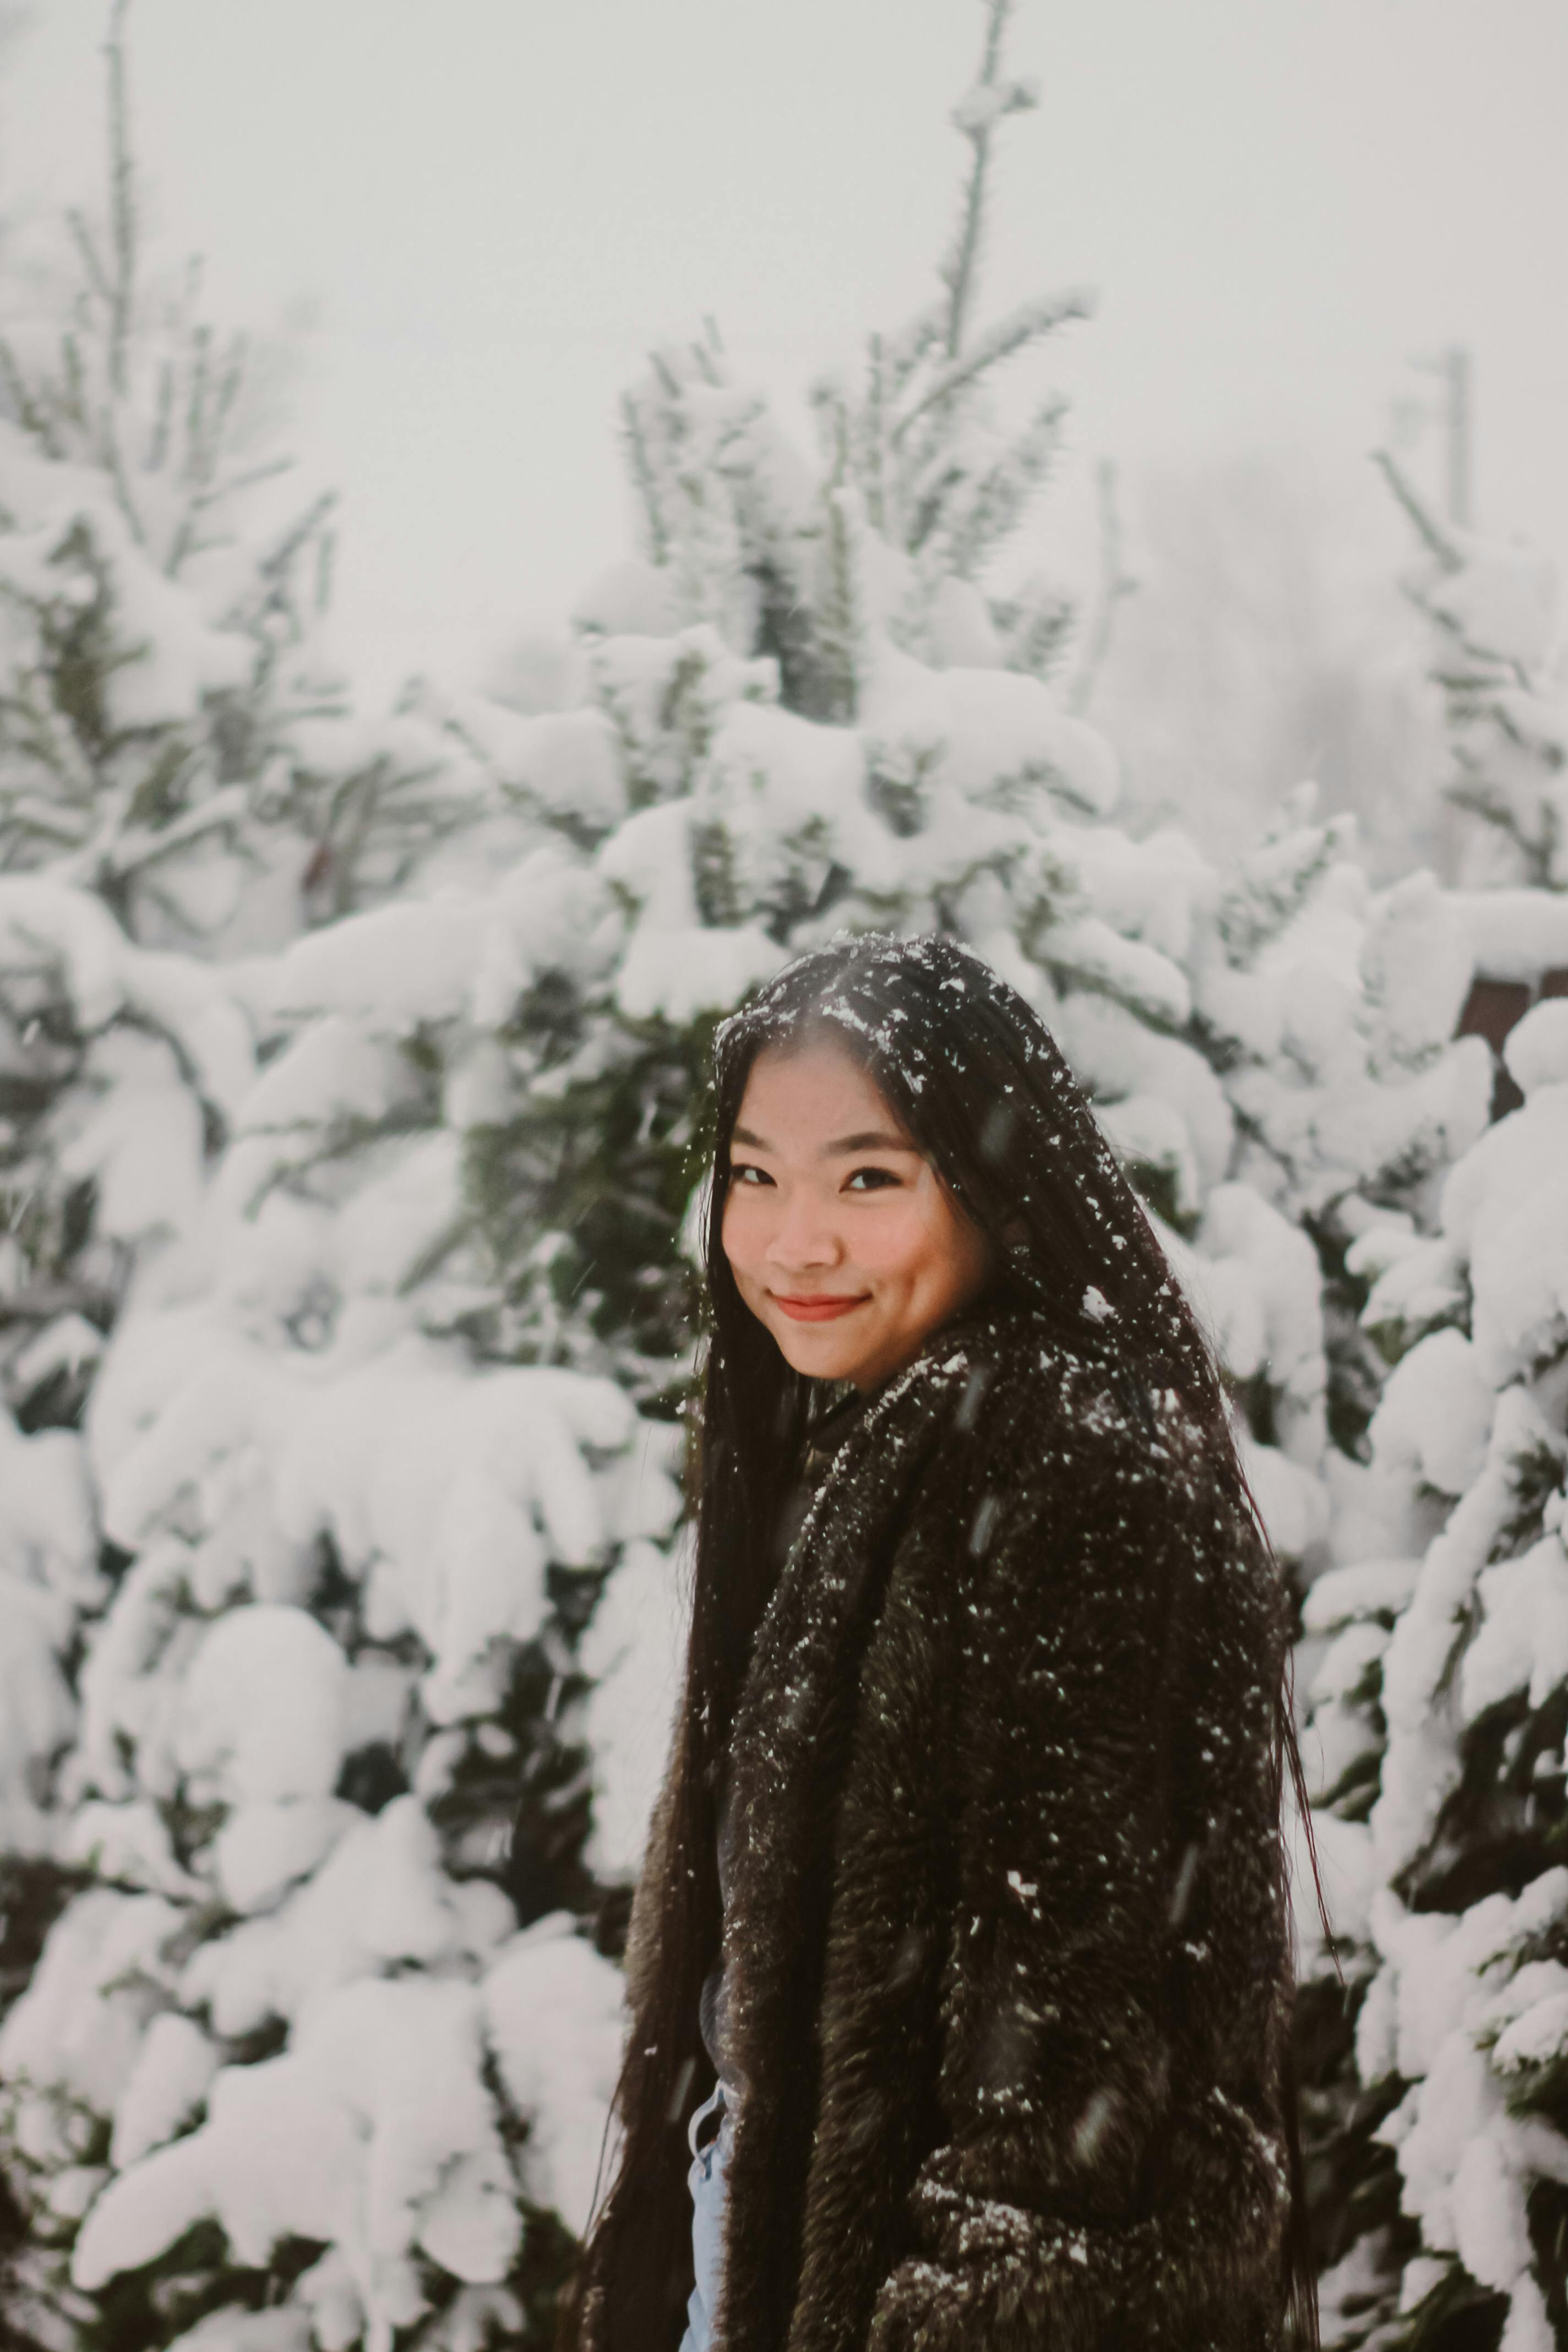 Full body portrait of young woman walking in snowy winter park